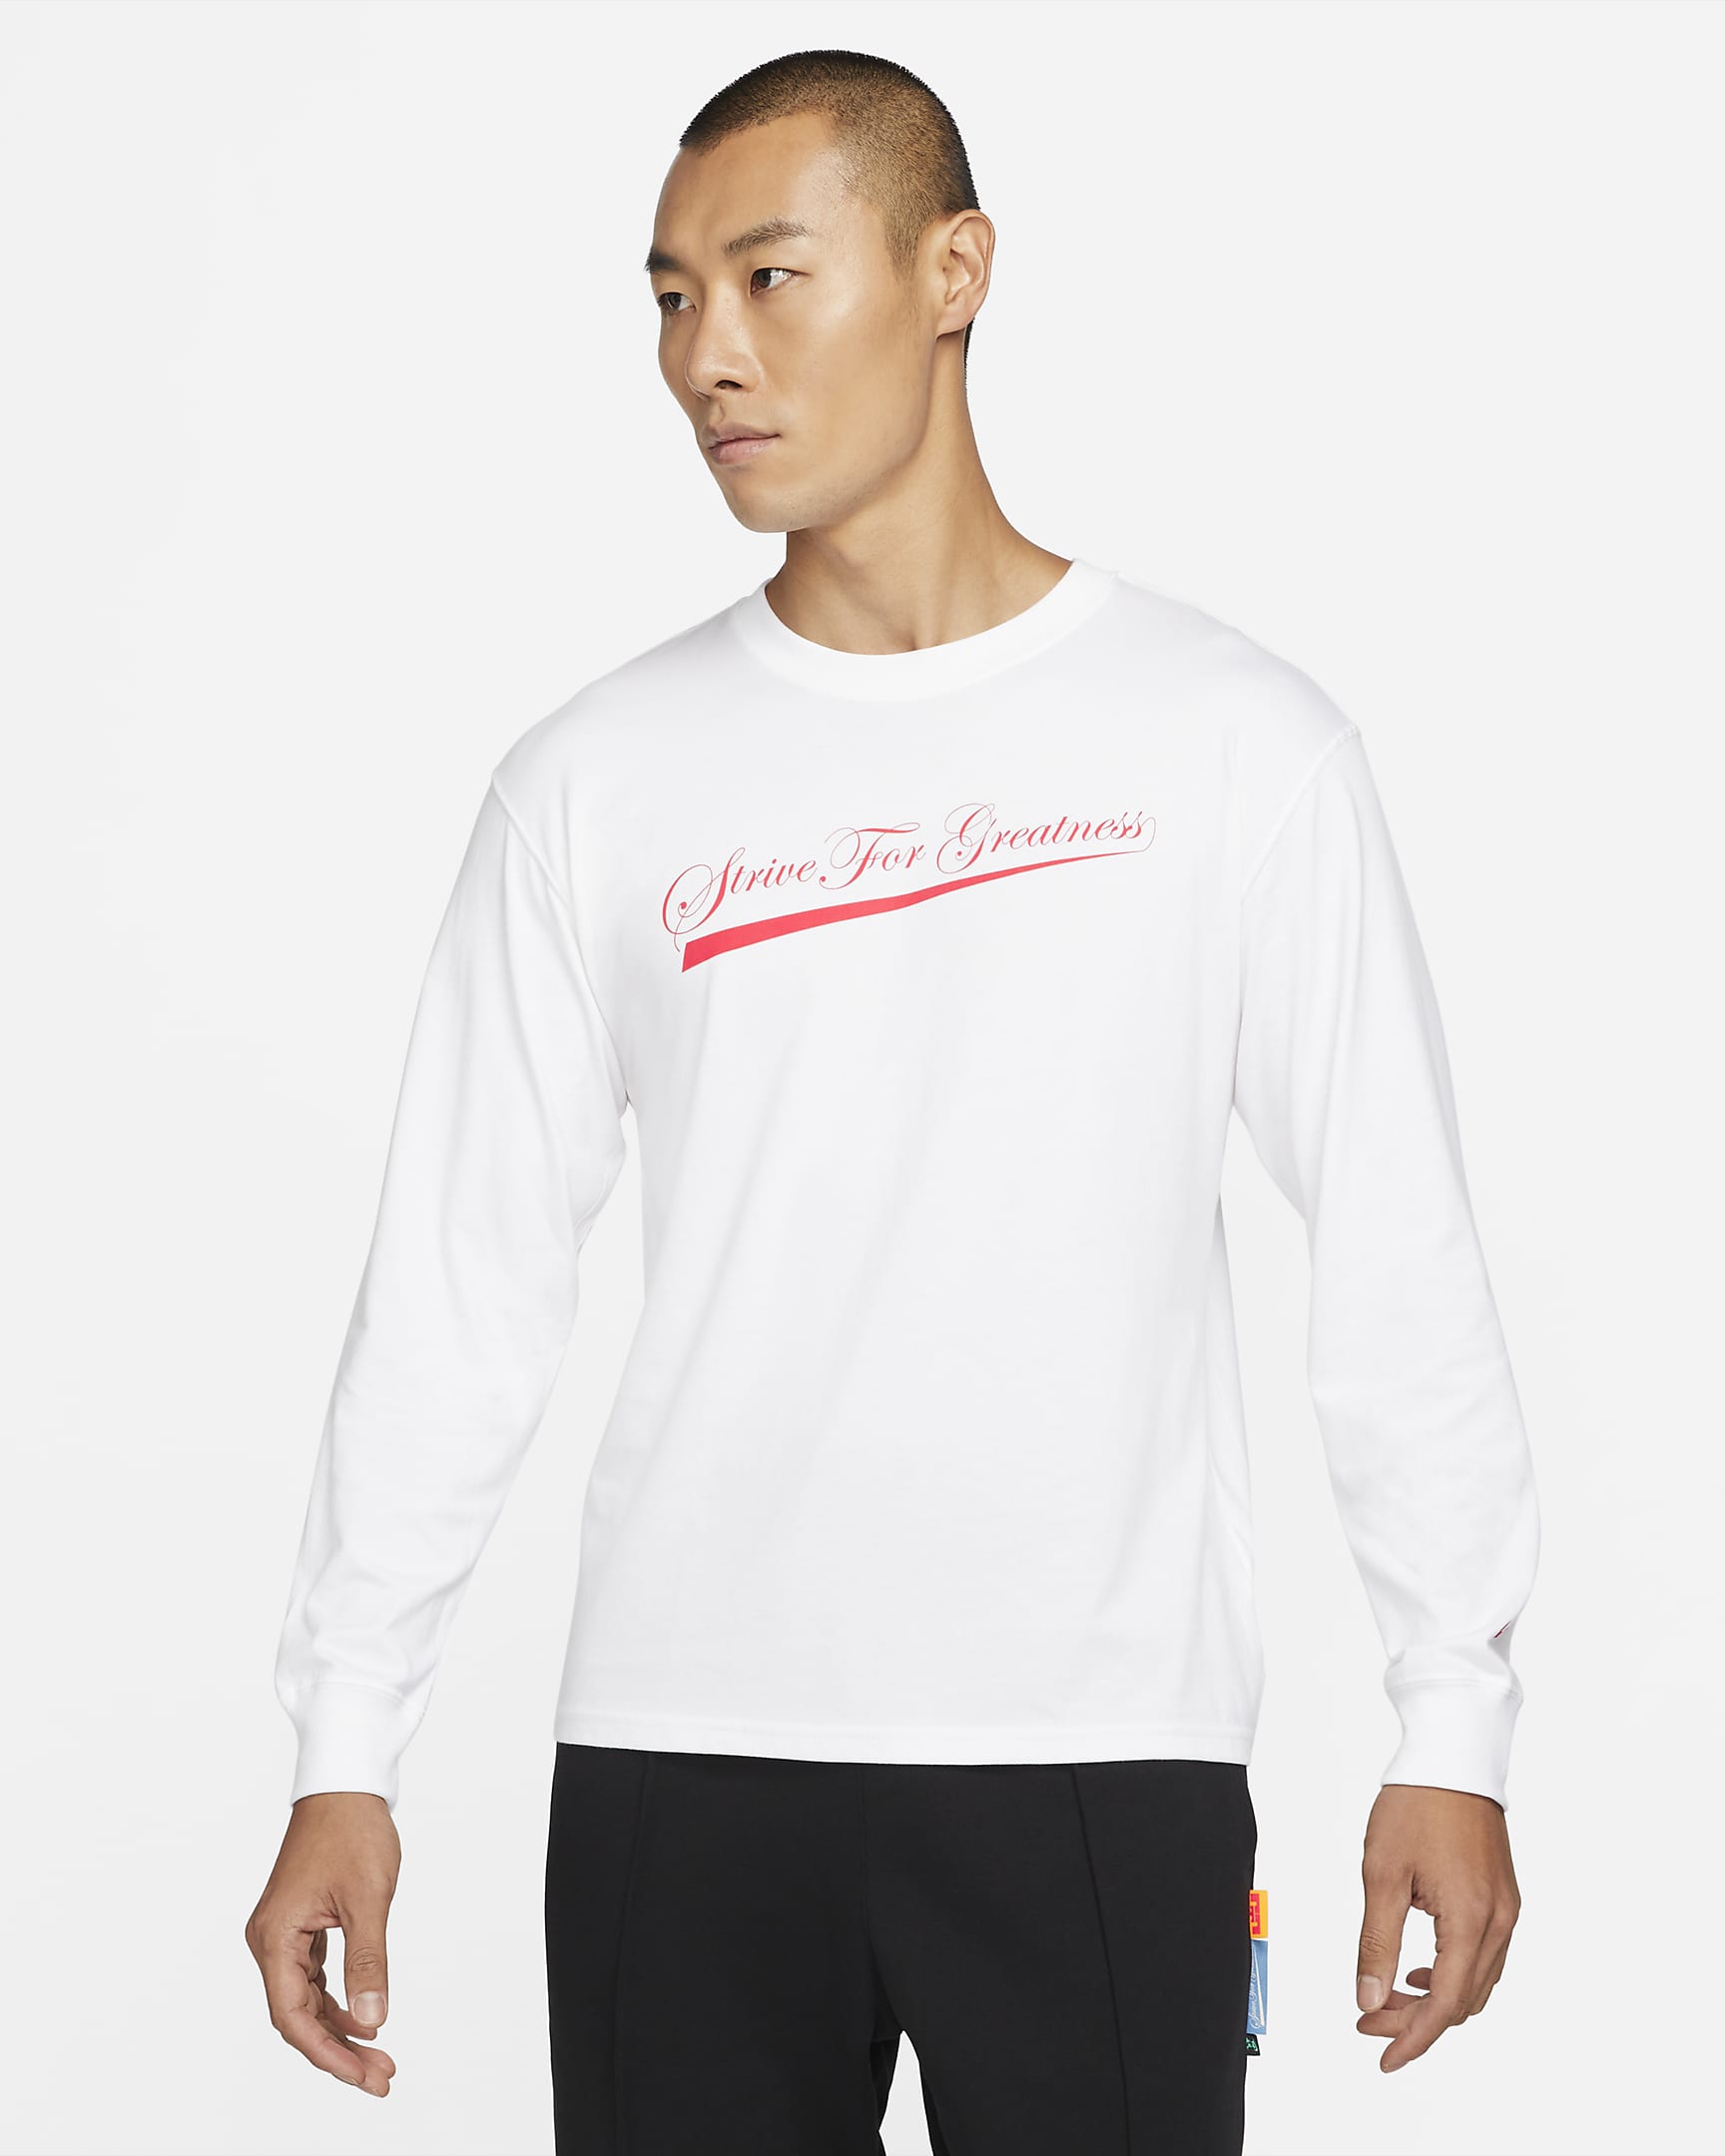 Nike LeBron 9 South Coast Shirts Hats Clothing Outfits